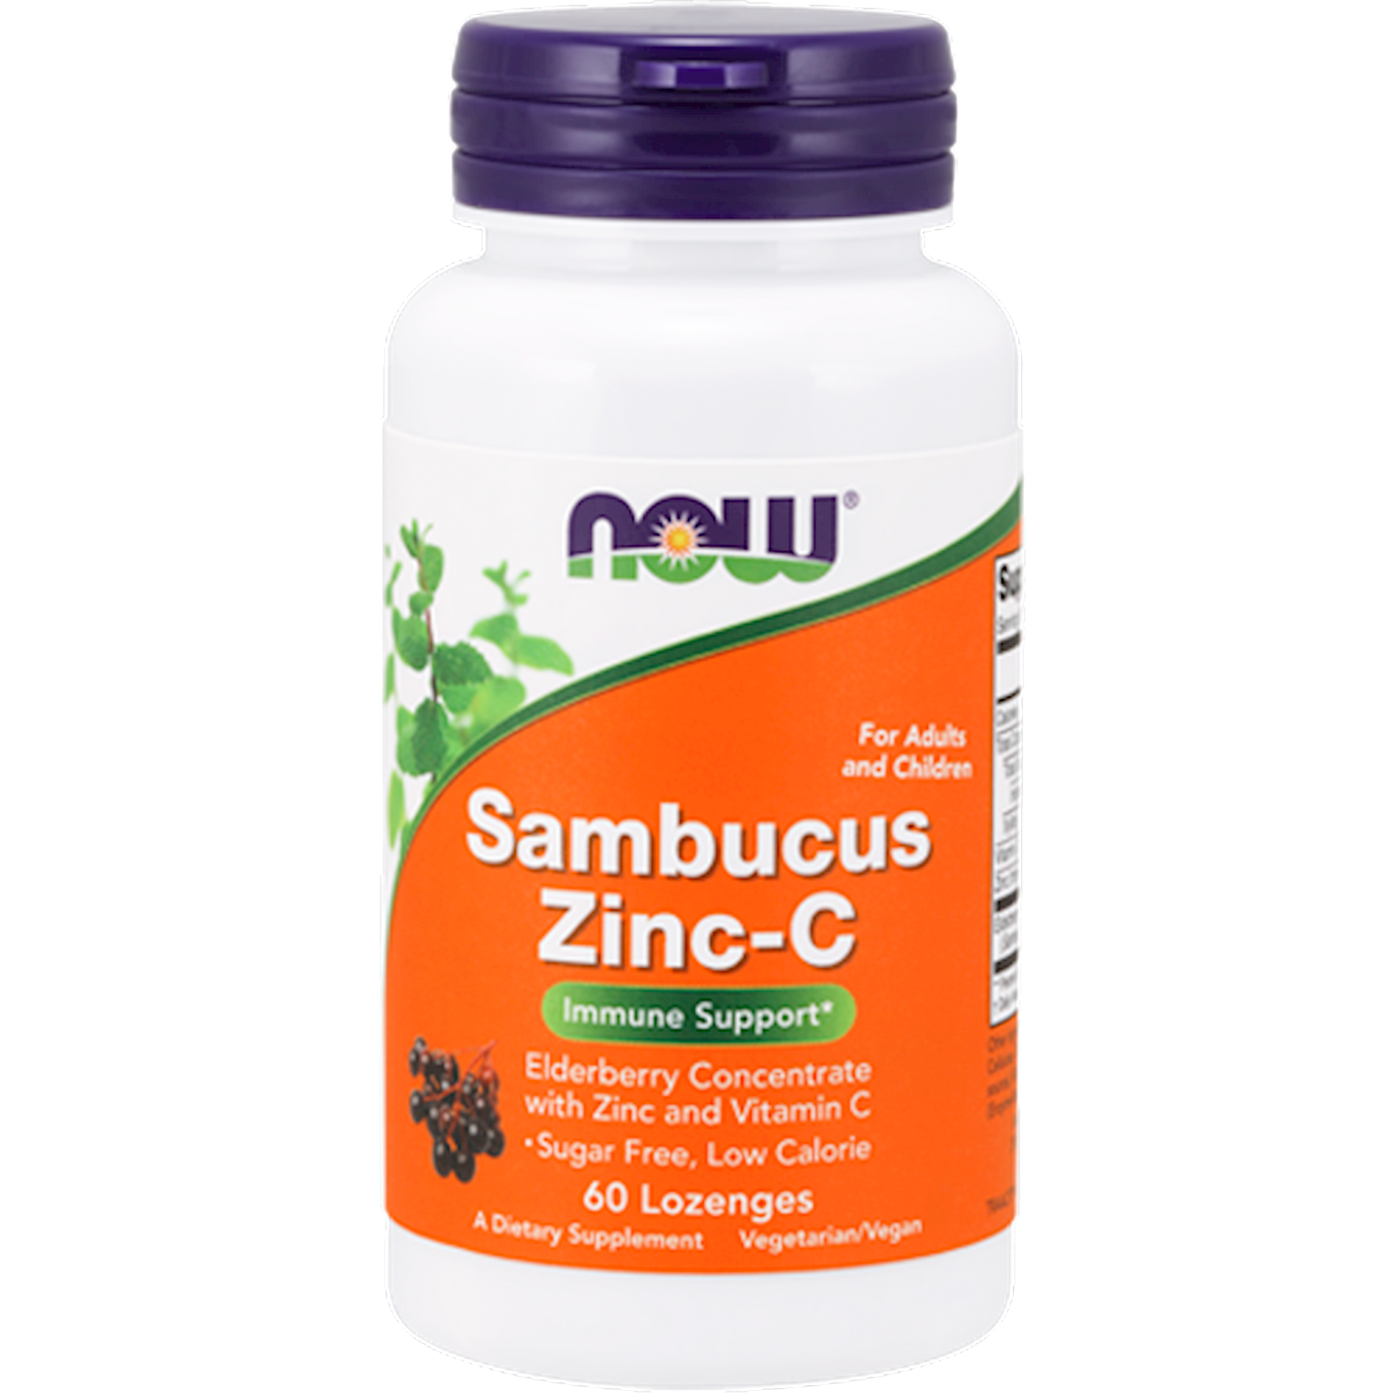 Sambucus Zinc-C enges Curated Wellness